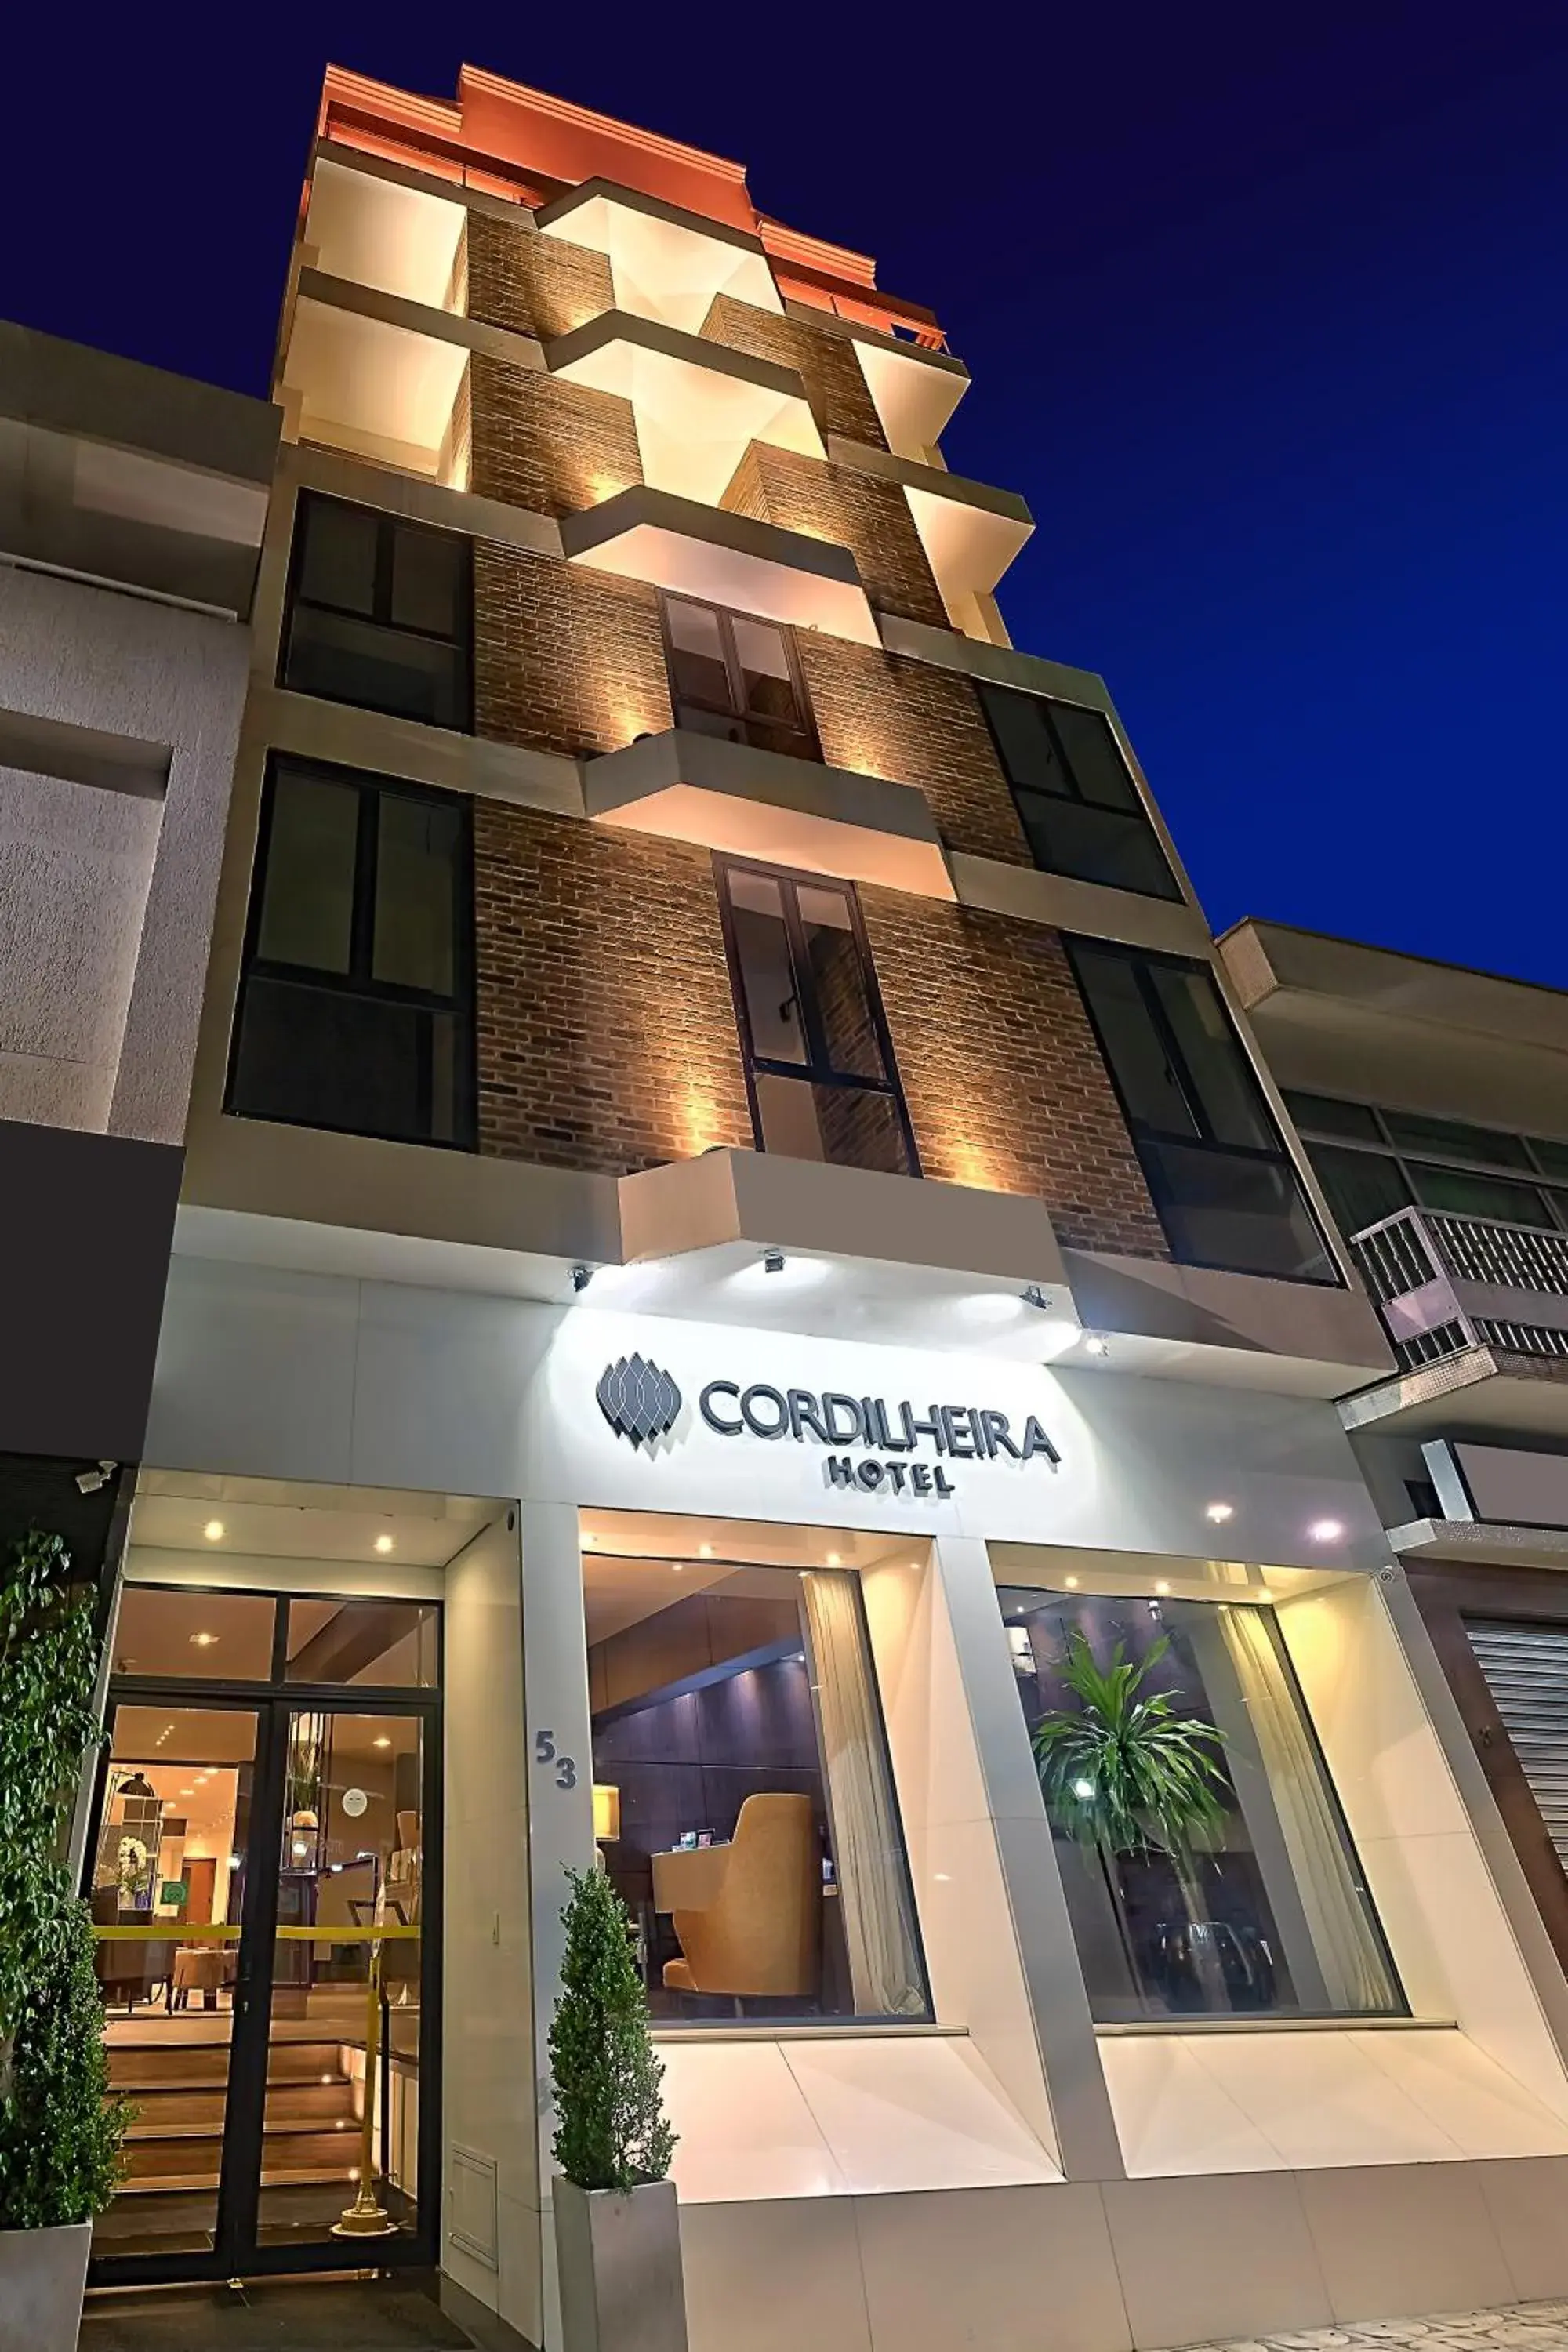 Property building in Cordilheira Hotel